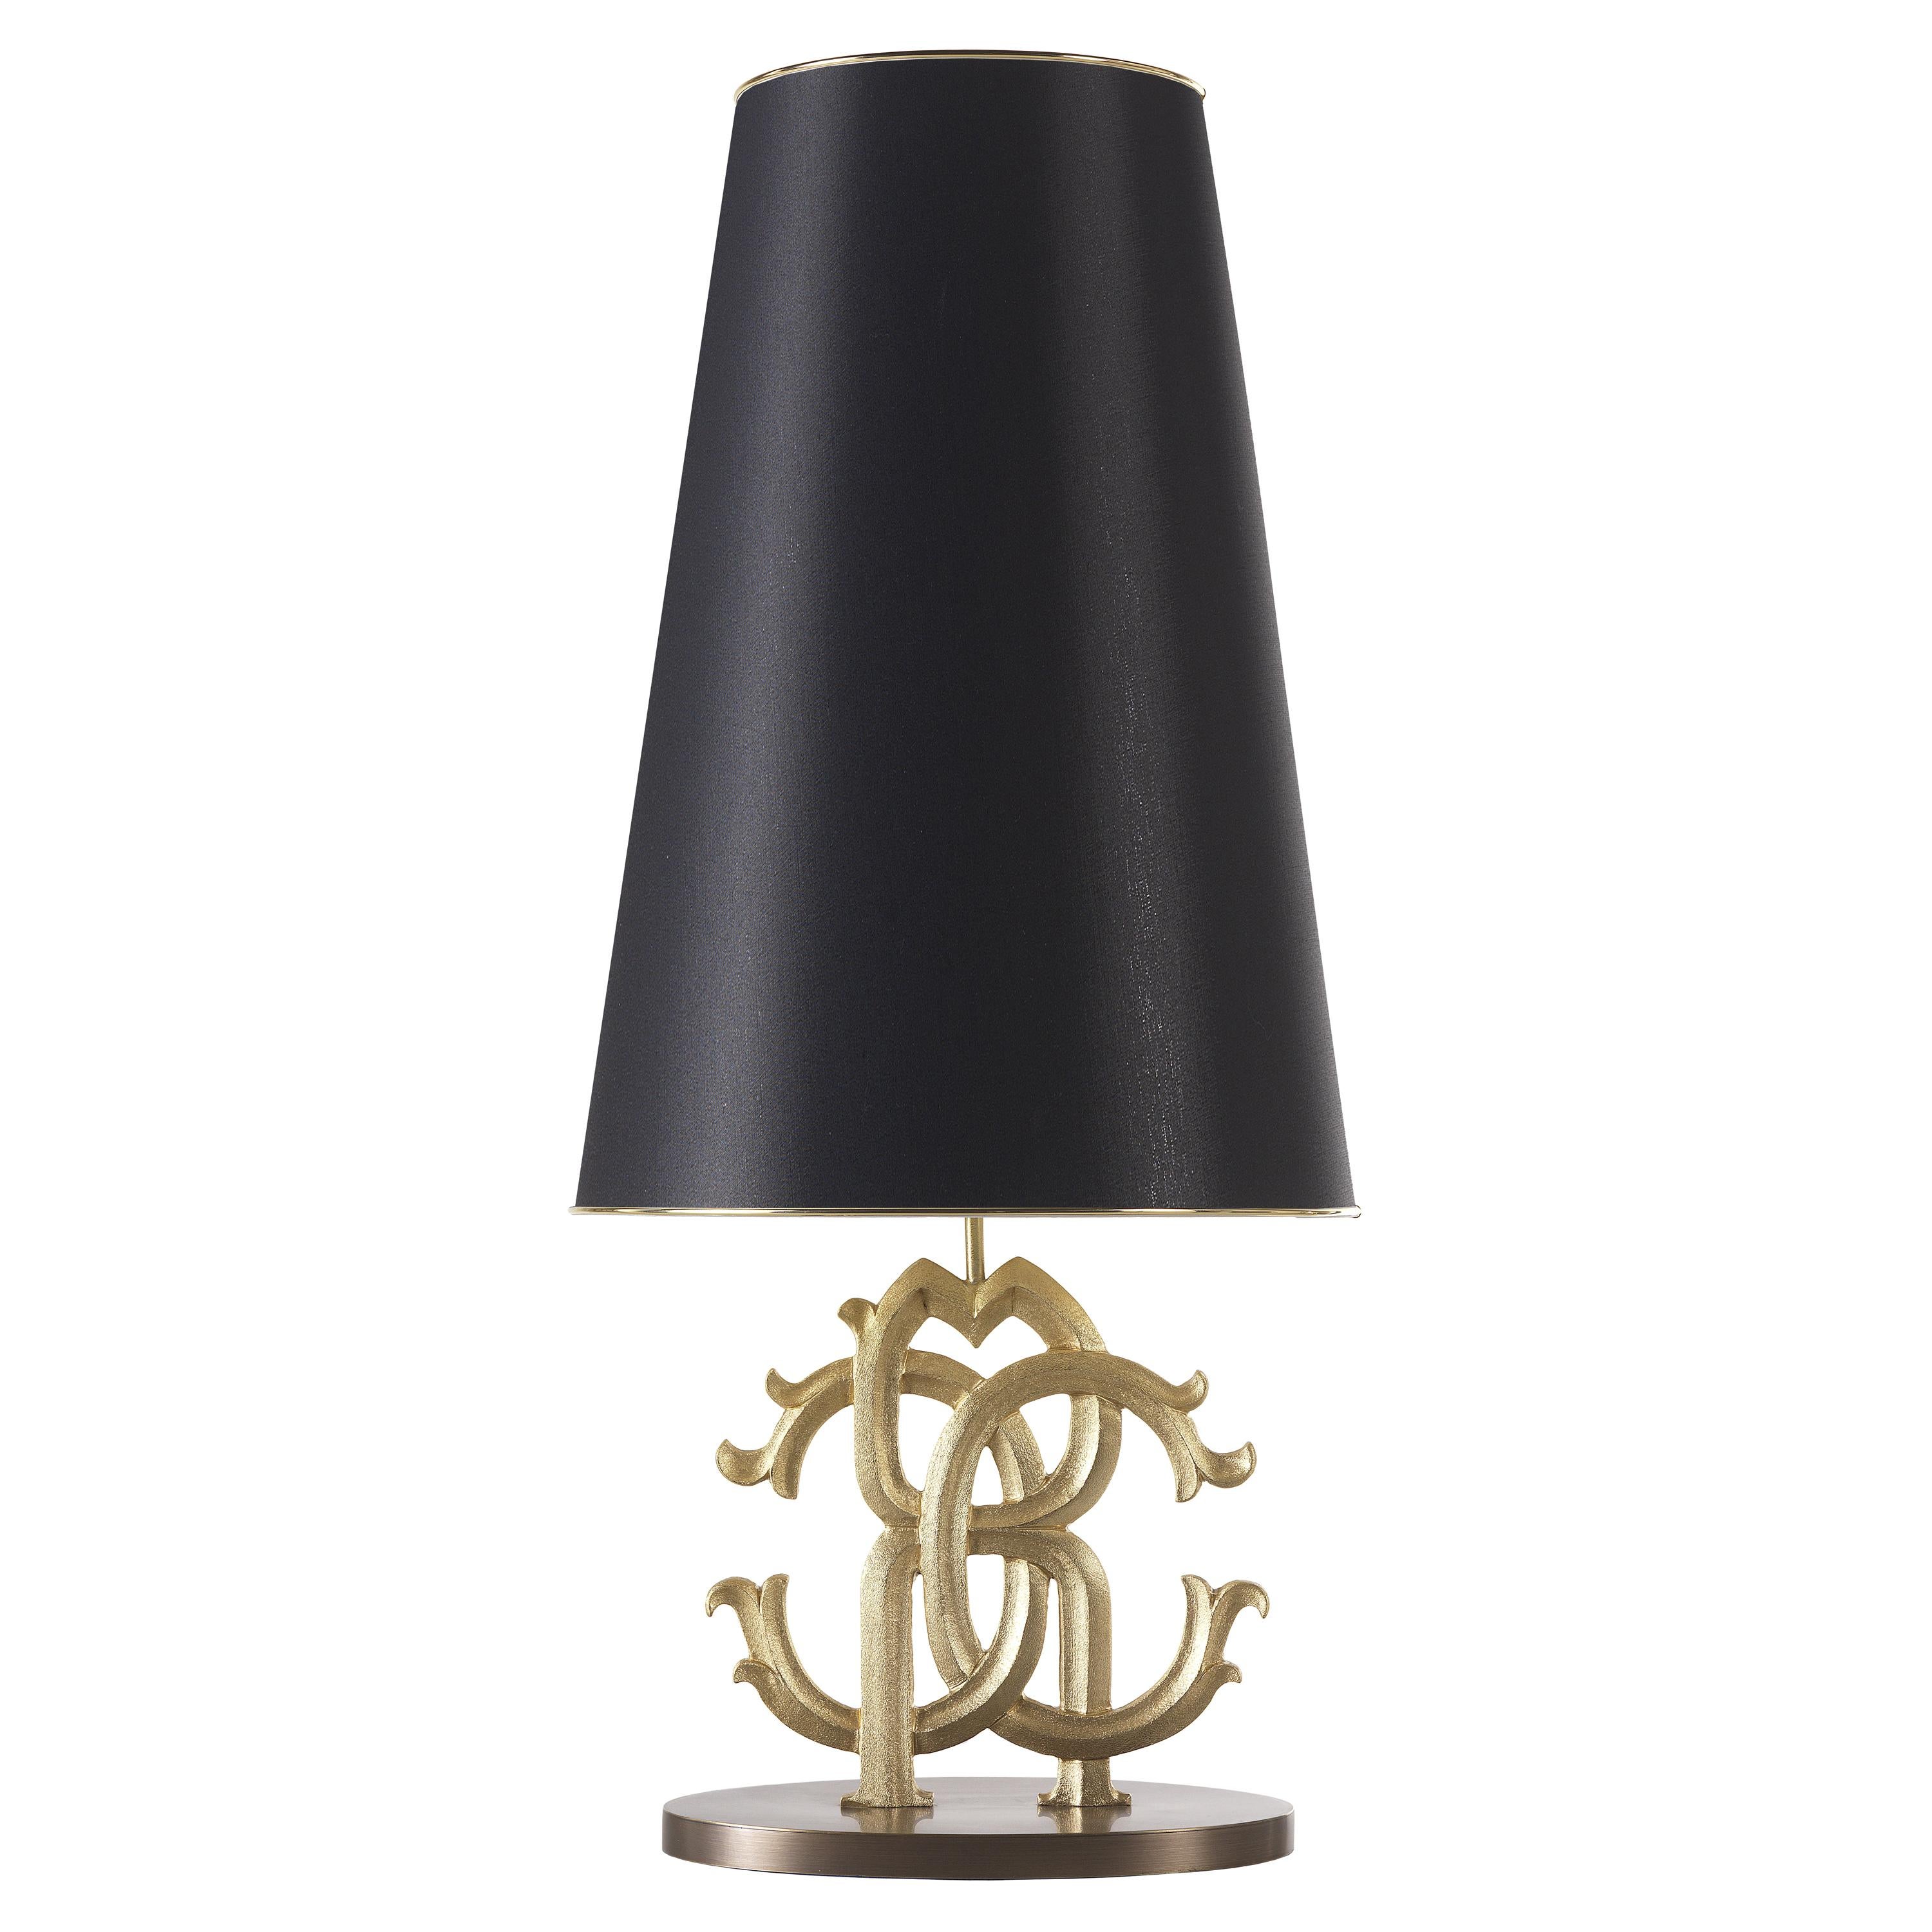 Roberto Cavalli Home Interiors Logo Table Lamp with Black Fabric Shade